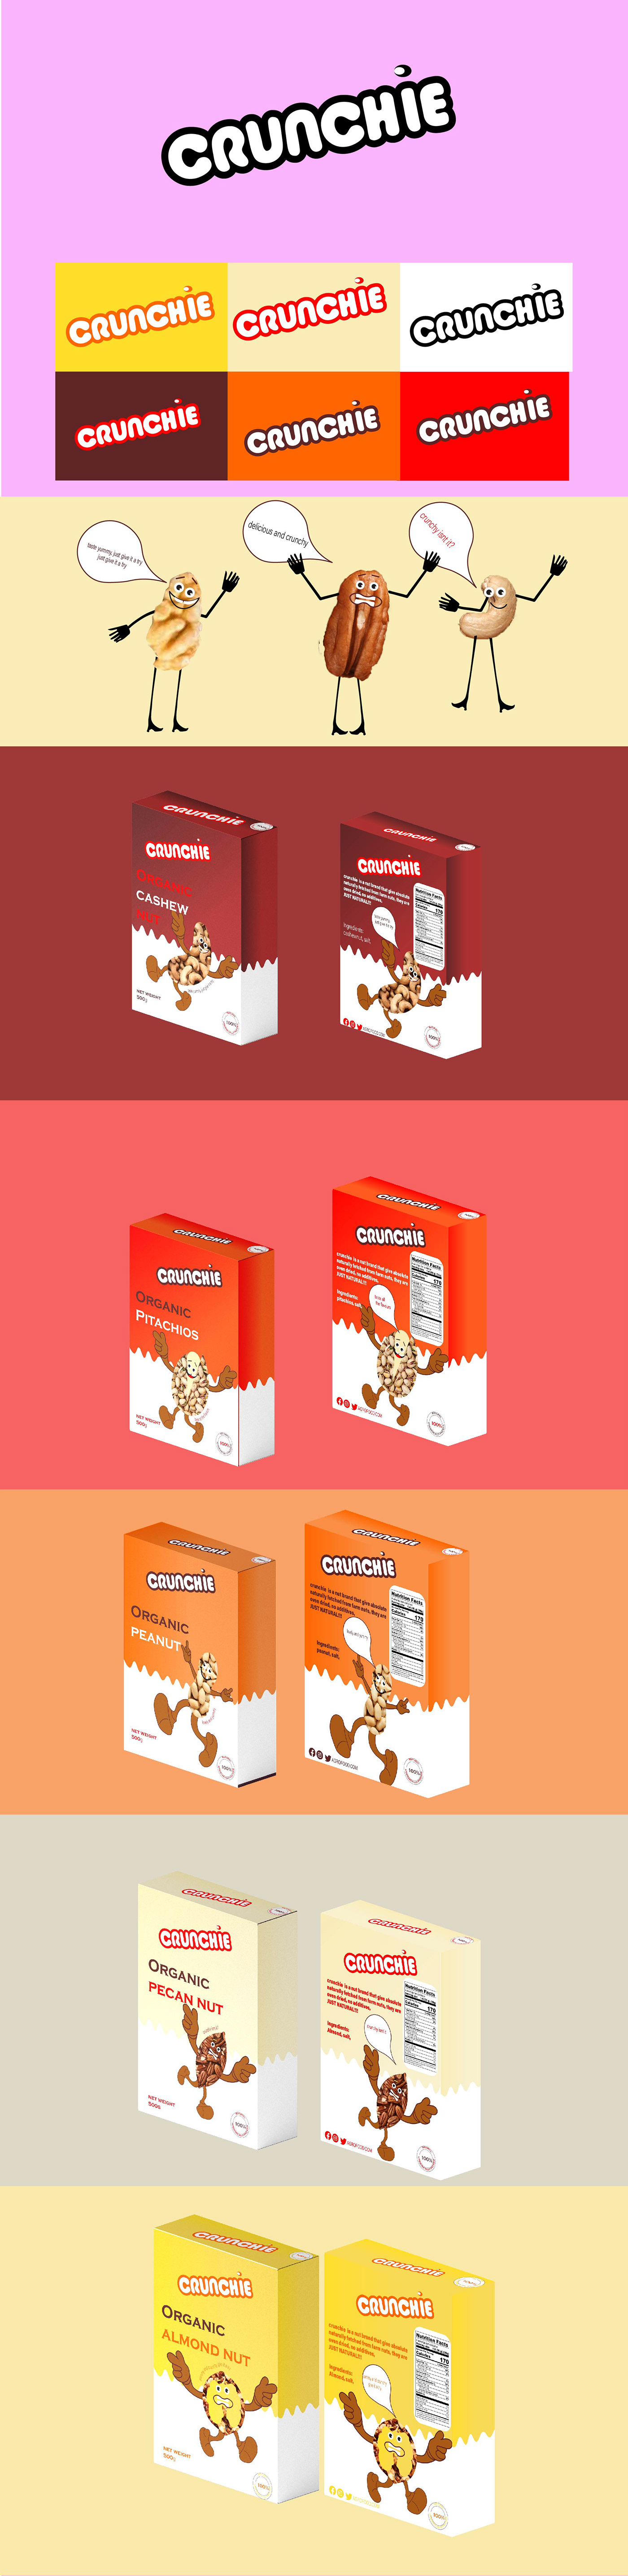 adobe illustrator Crunchie design logo package packaging design packagingdesign visual identity